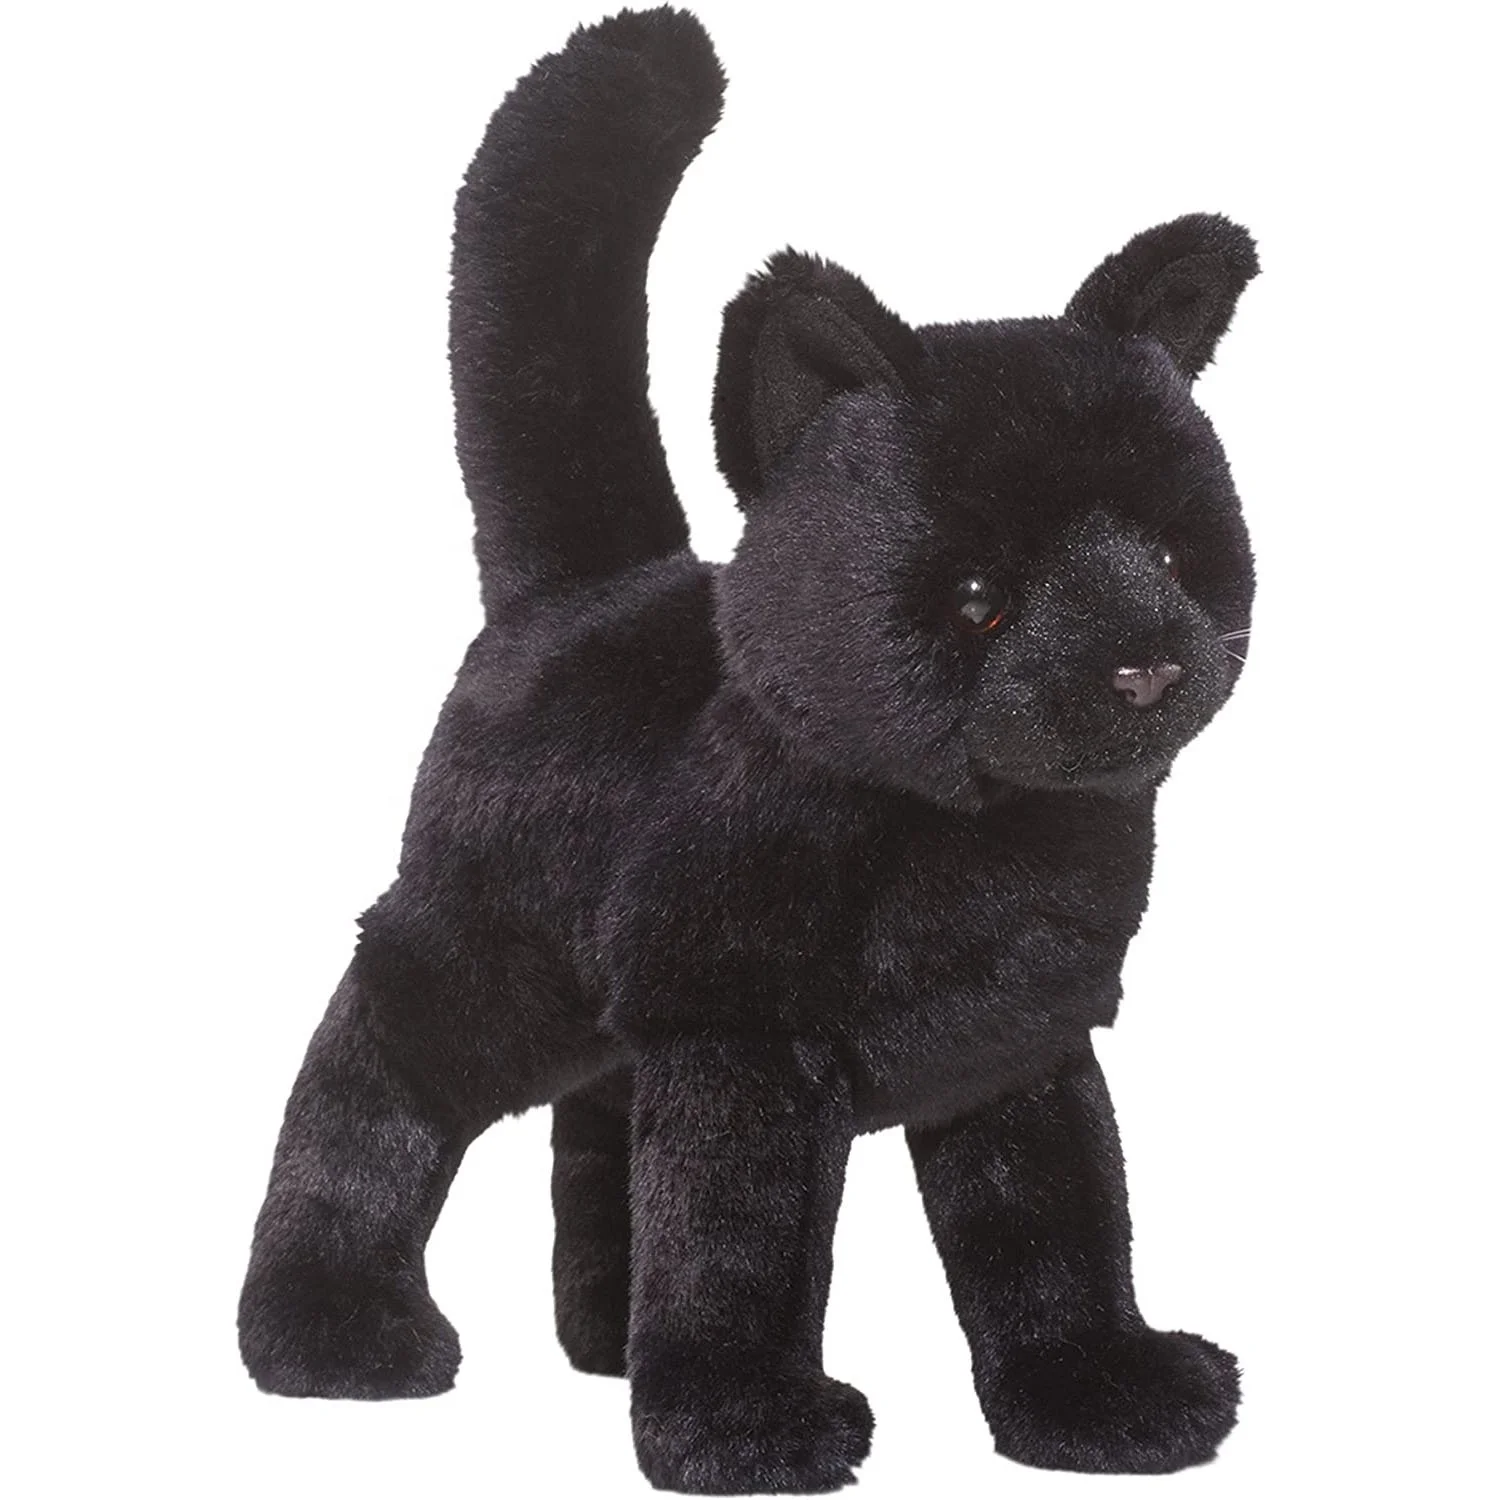 Черно плюшевая. Мягкая игрушка черный кот. Мягкая игрушка «чёрный котик». Мягкая игрушка черная кошка. Плюшевая игрушка черный кот.